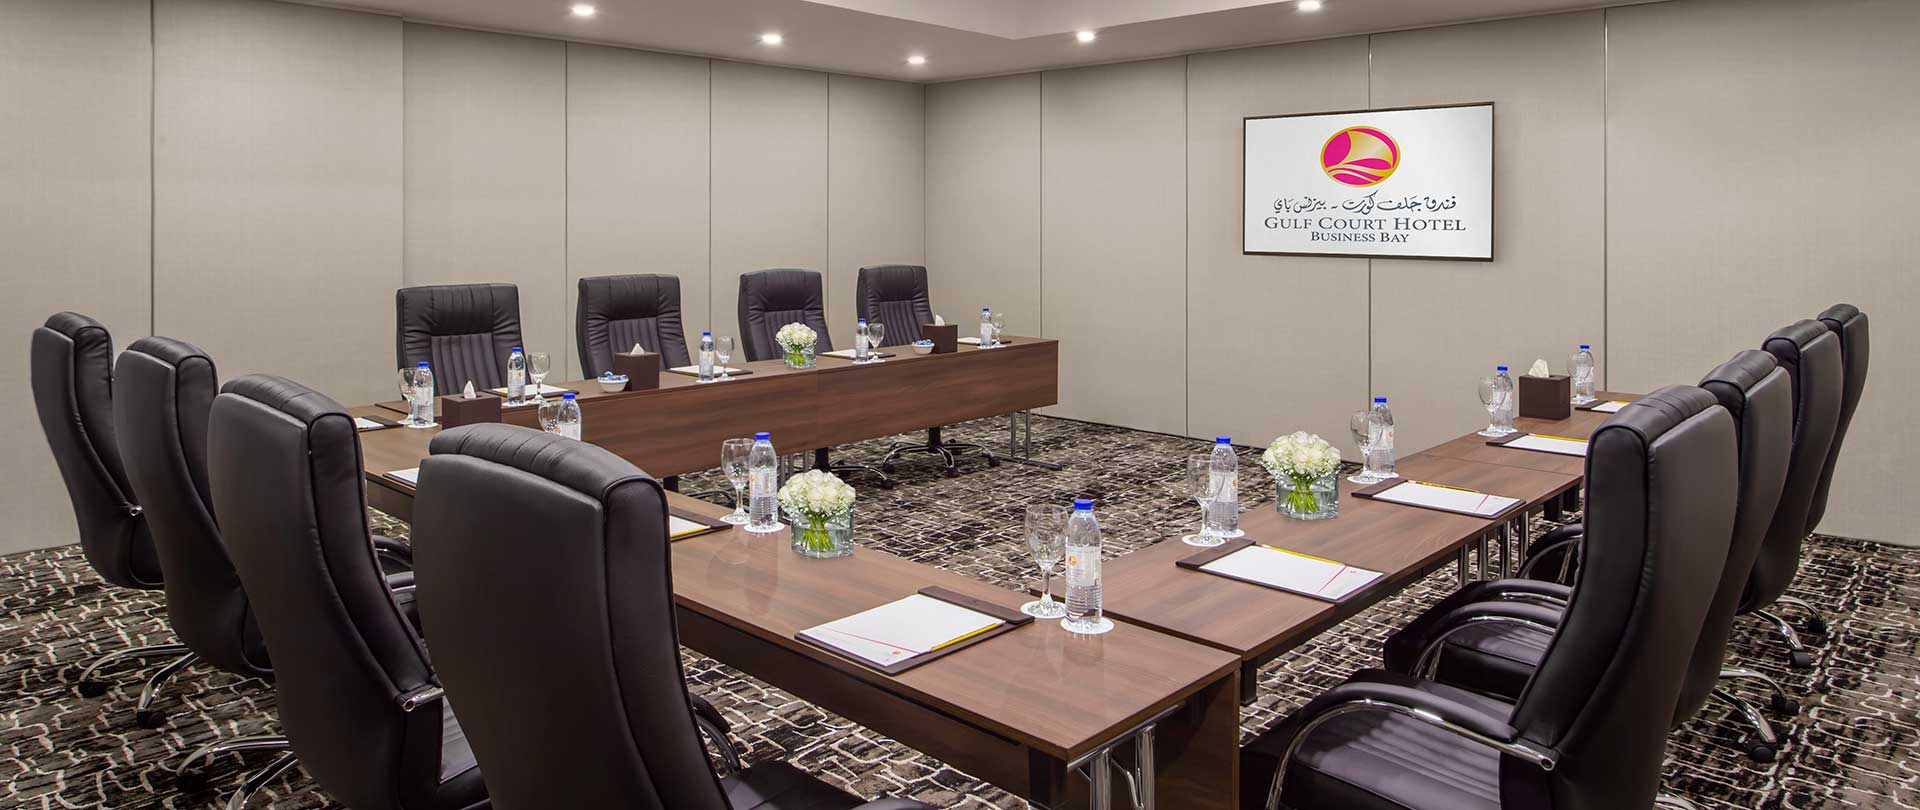 Gulf Court Hotel Business Bay Meeting Room, Dubai